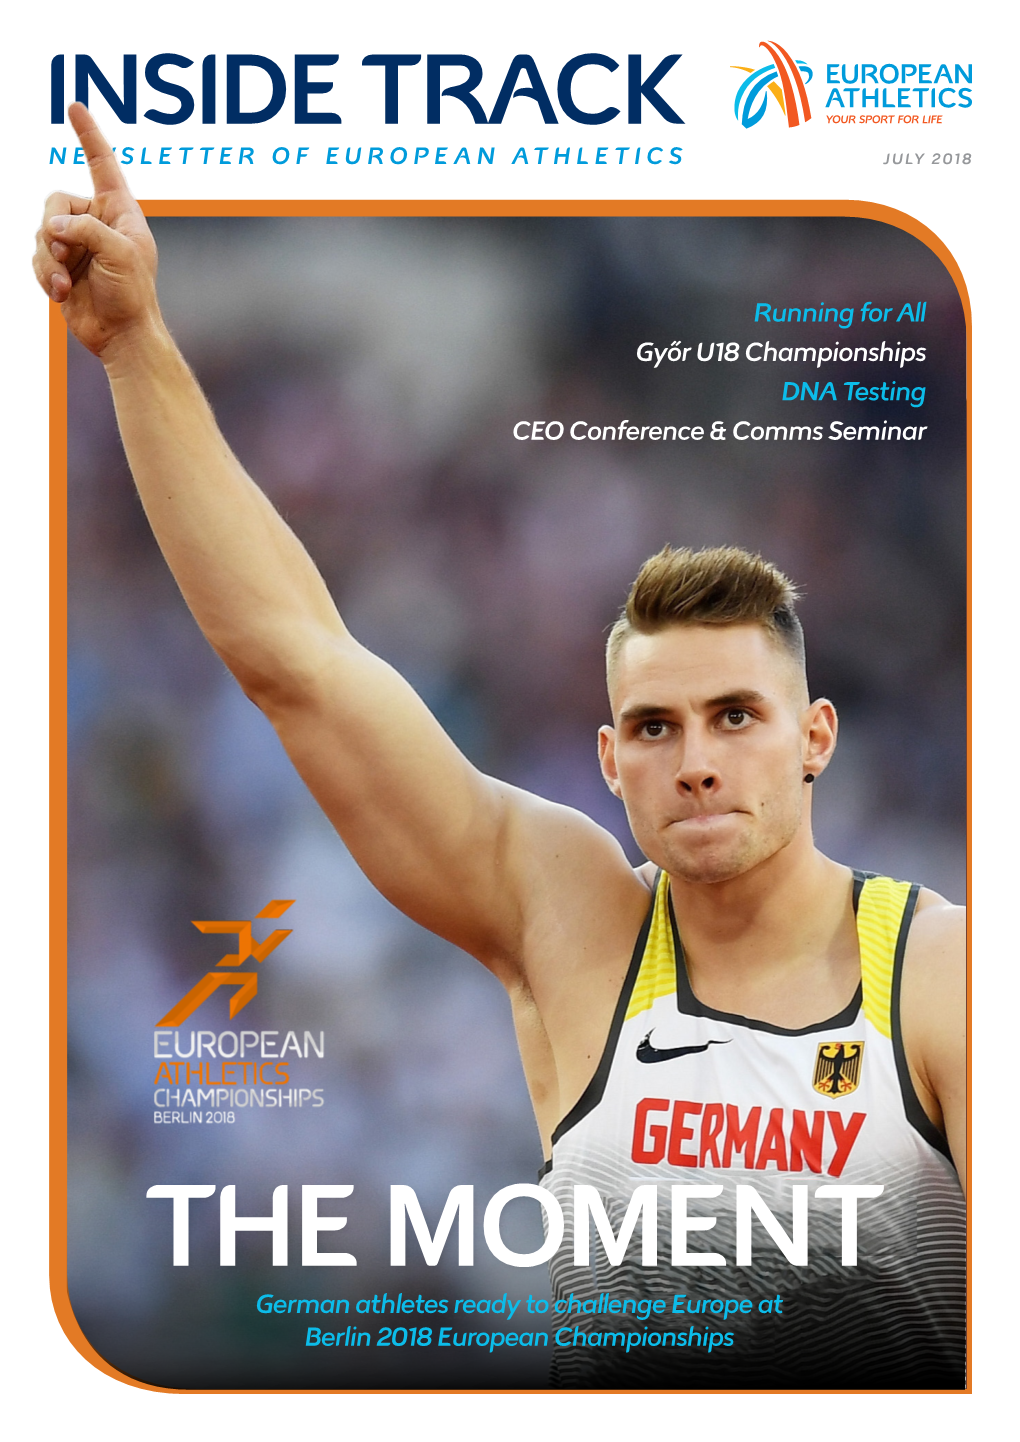 Inside Track Newsletter of European Athletics July 2018